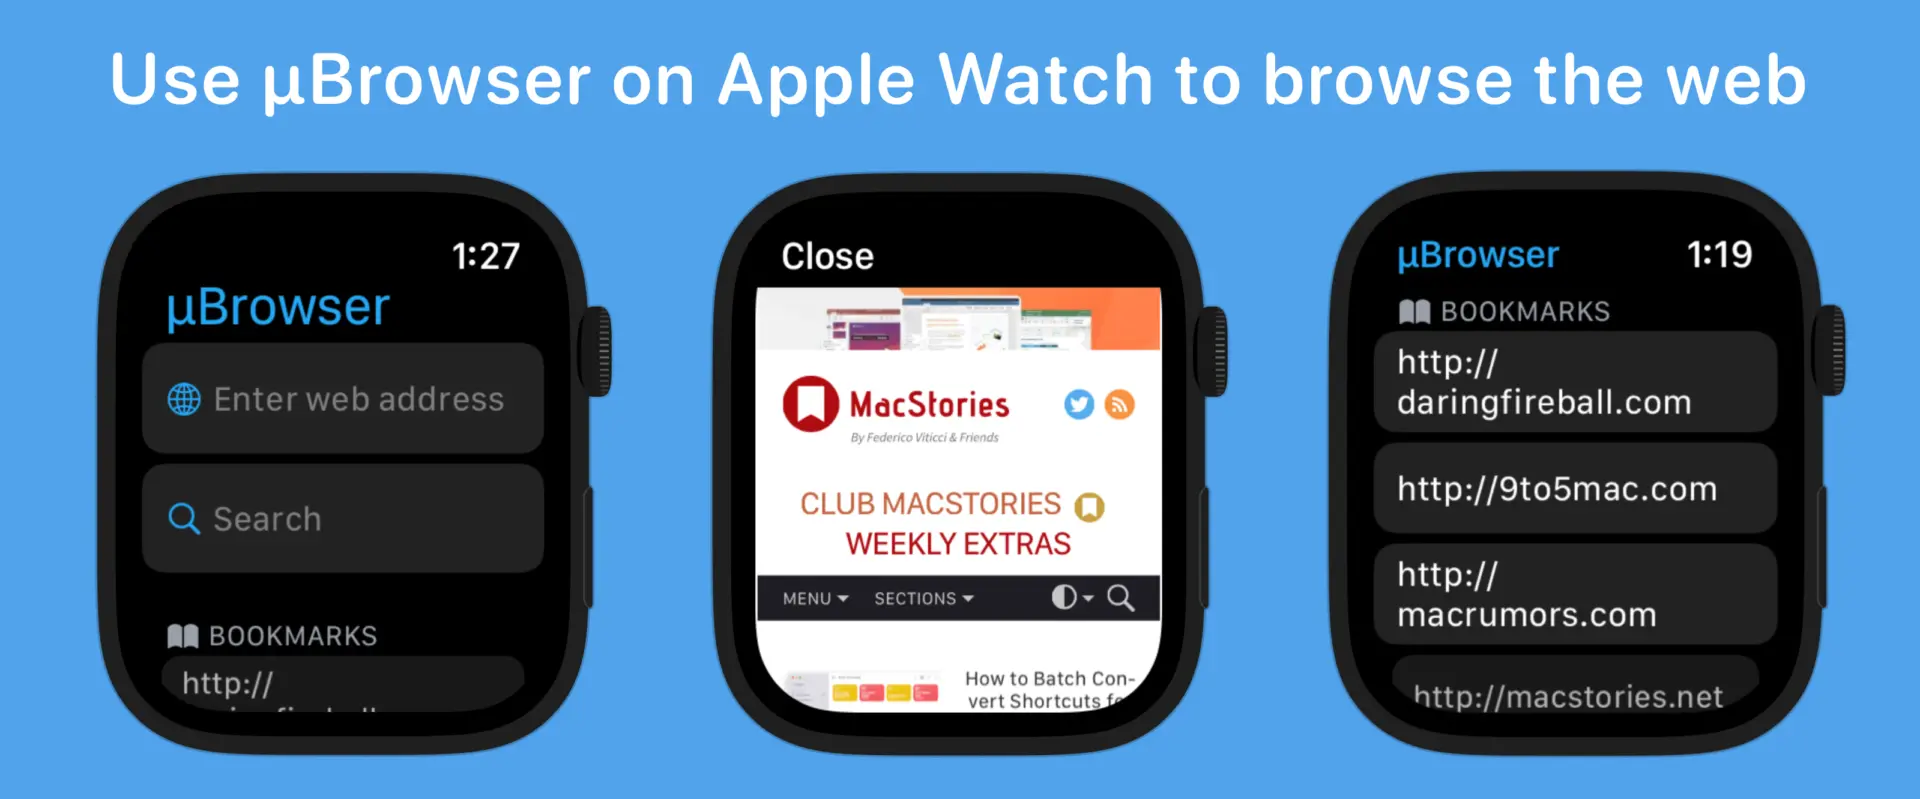 Duyệt web trên Apple Watch bằng µBrowser